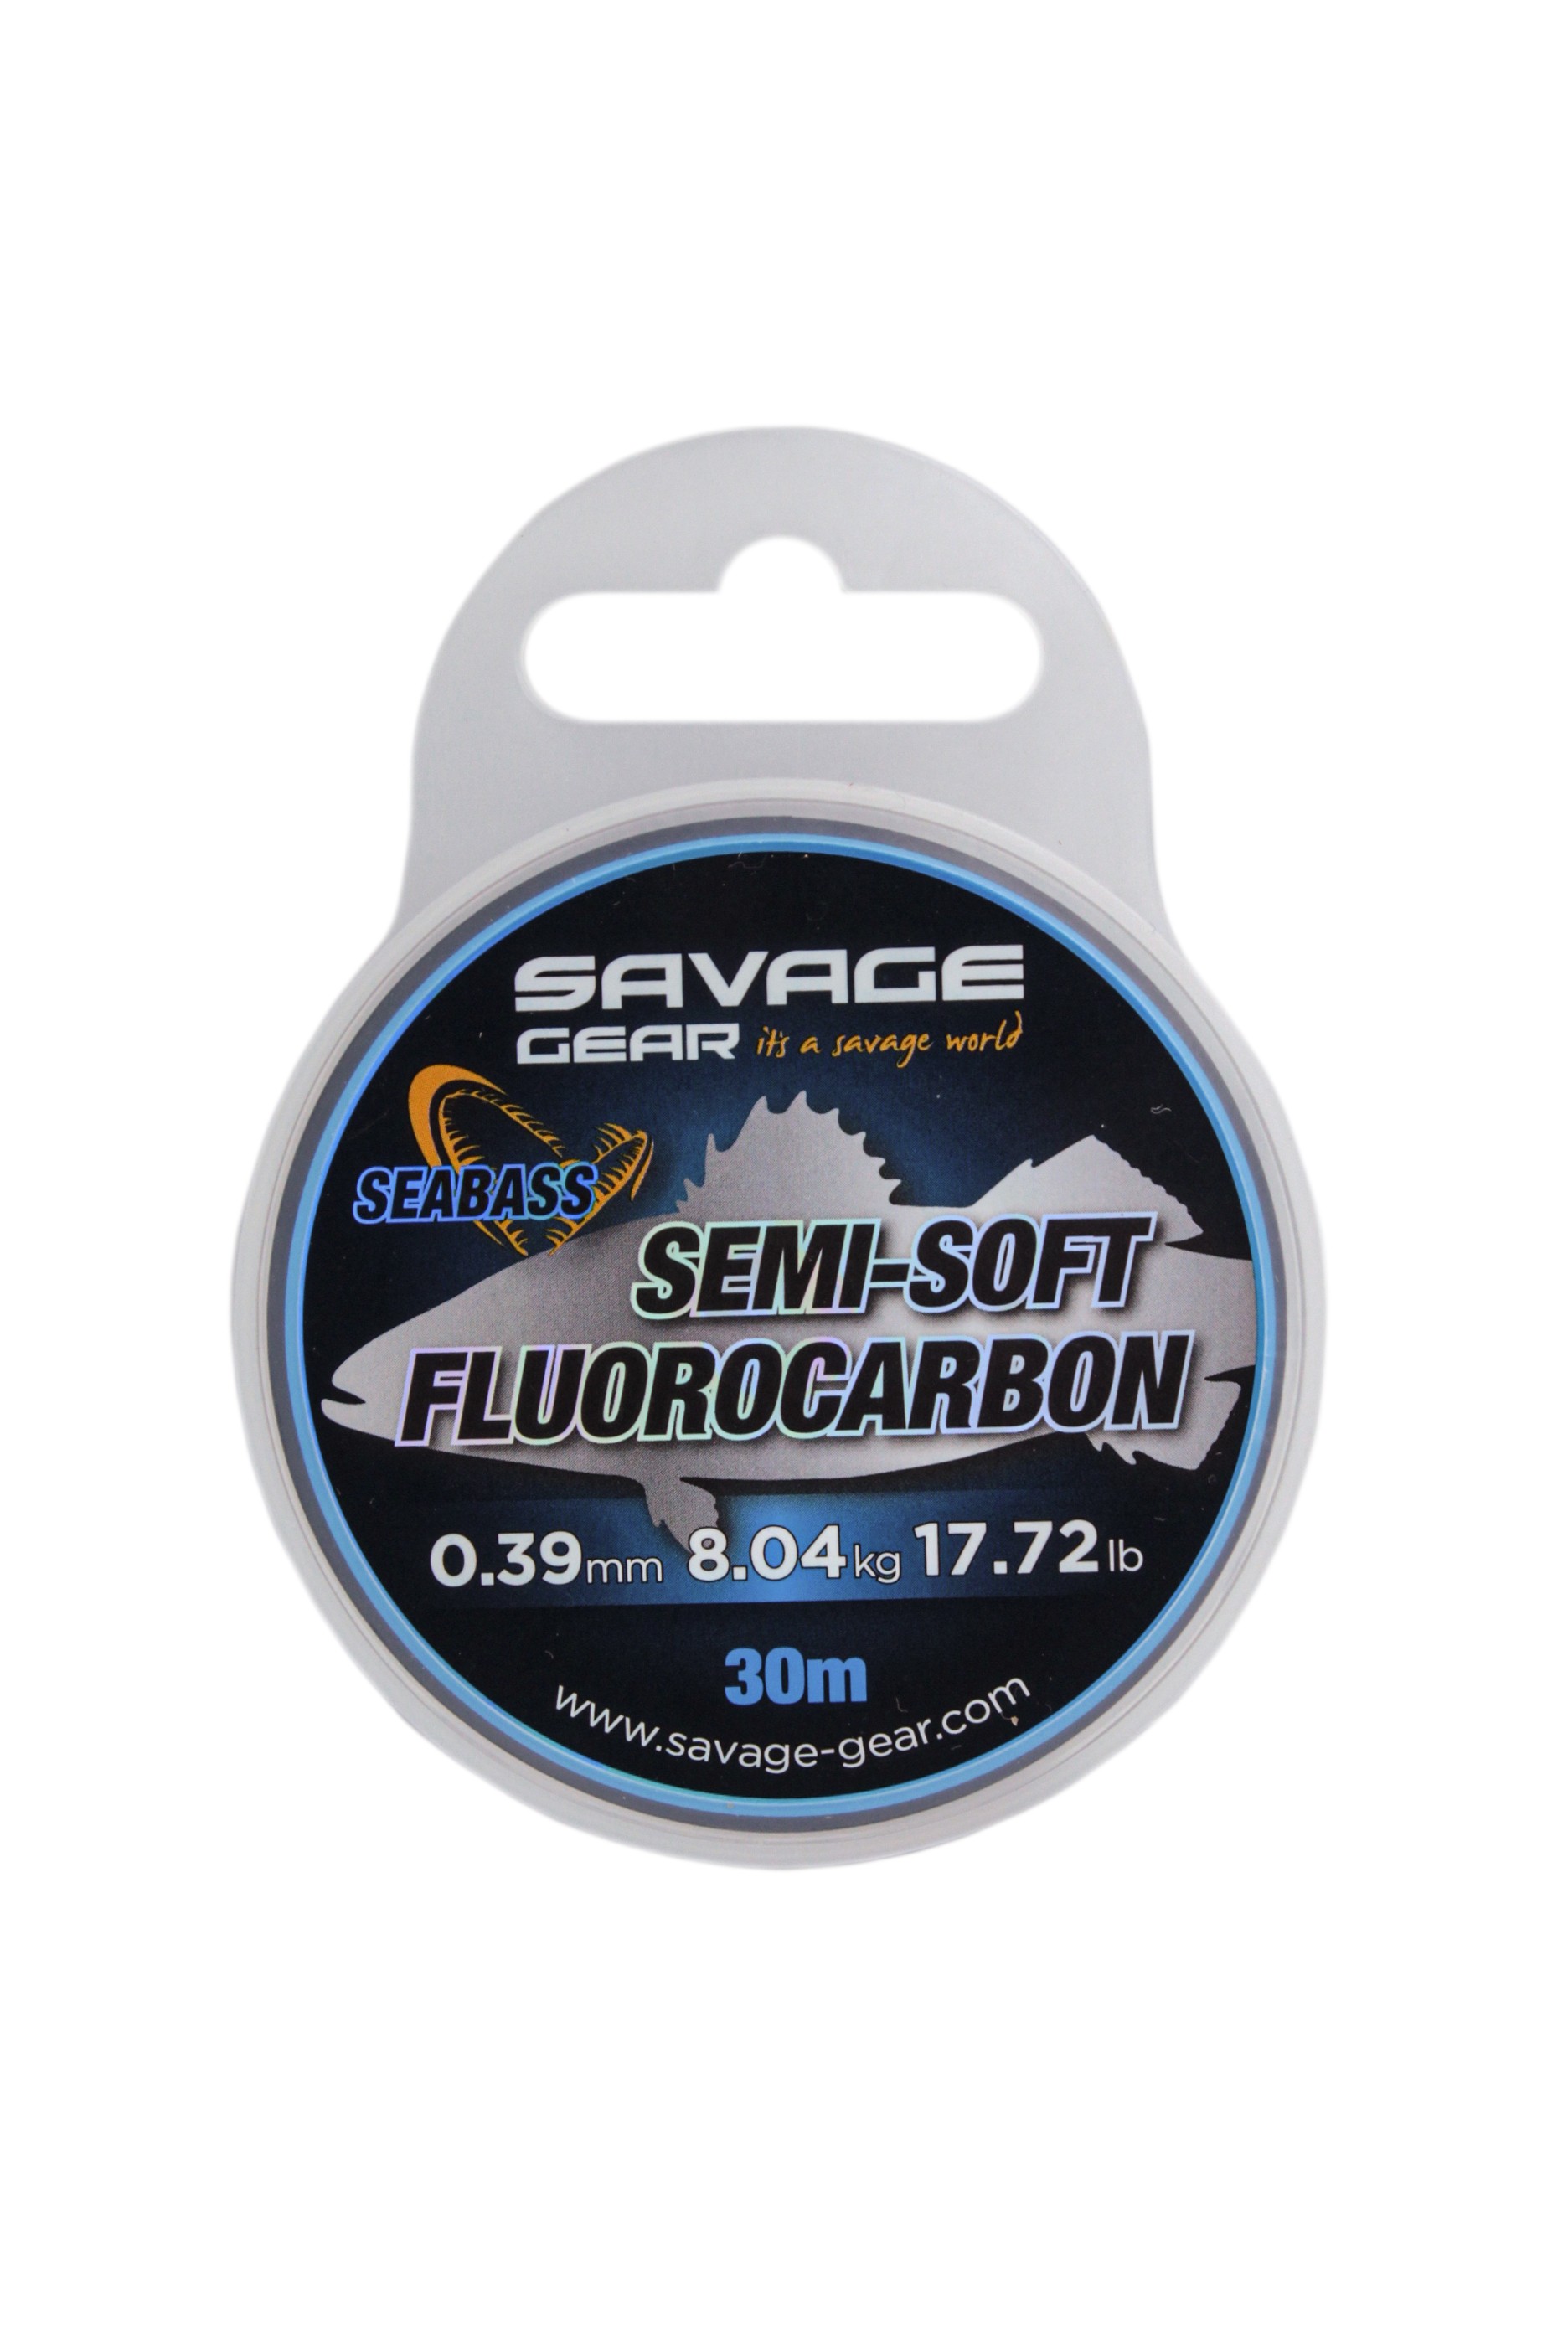 Леска Savage Gear Semi-soft fluorocarbon seabass 30м 0,39мм 8,04кг 17,72lbs clea - фото 1